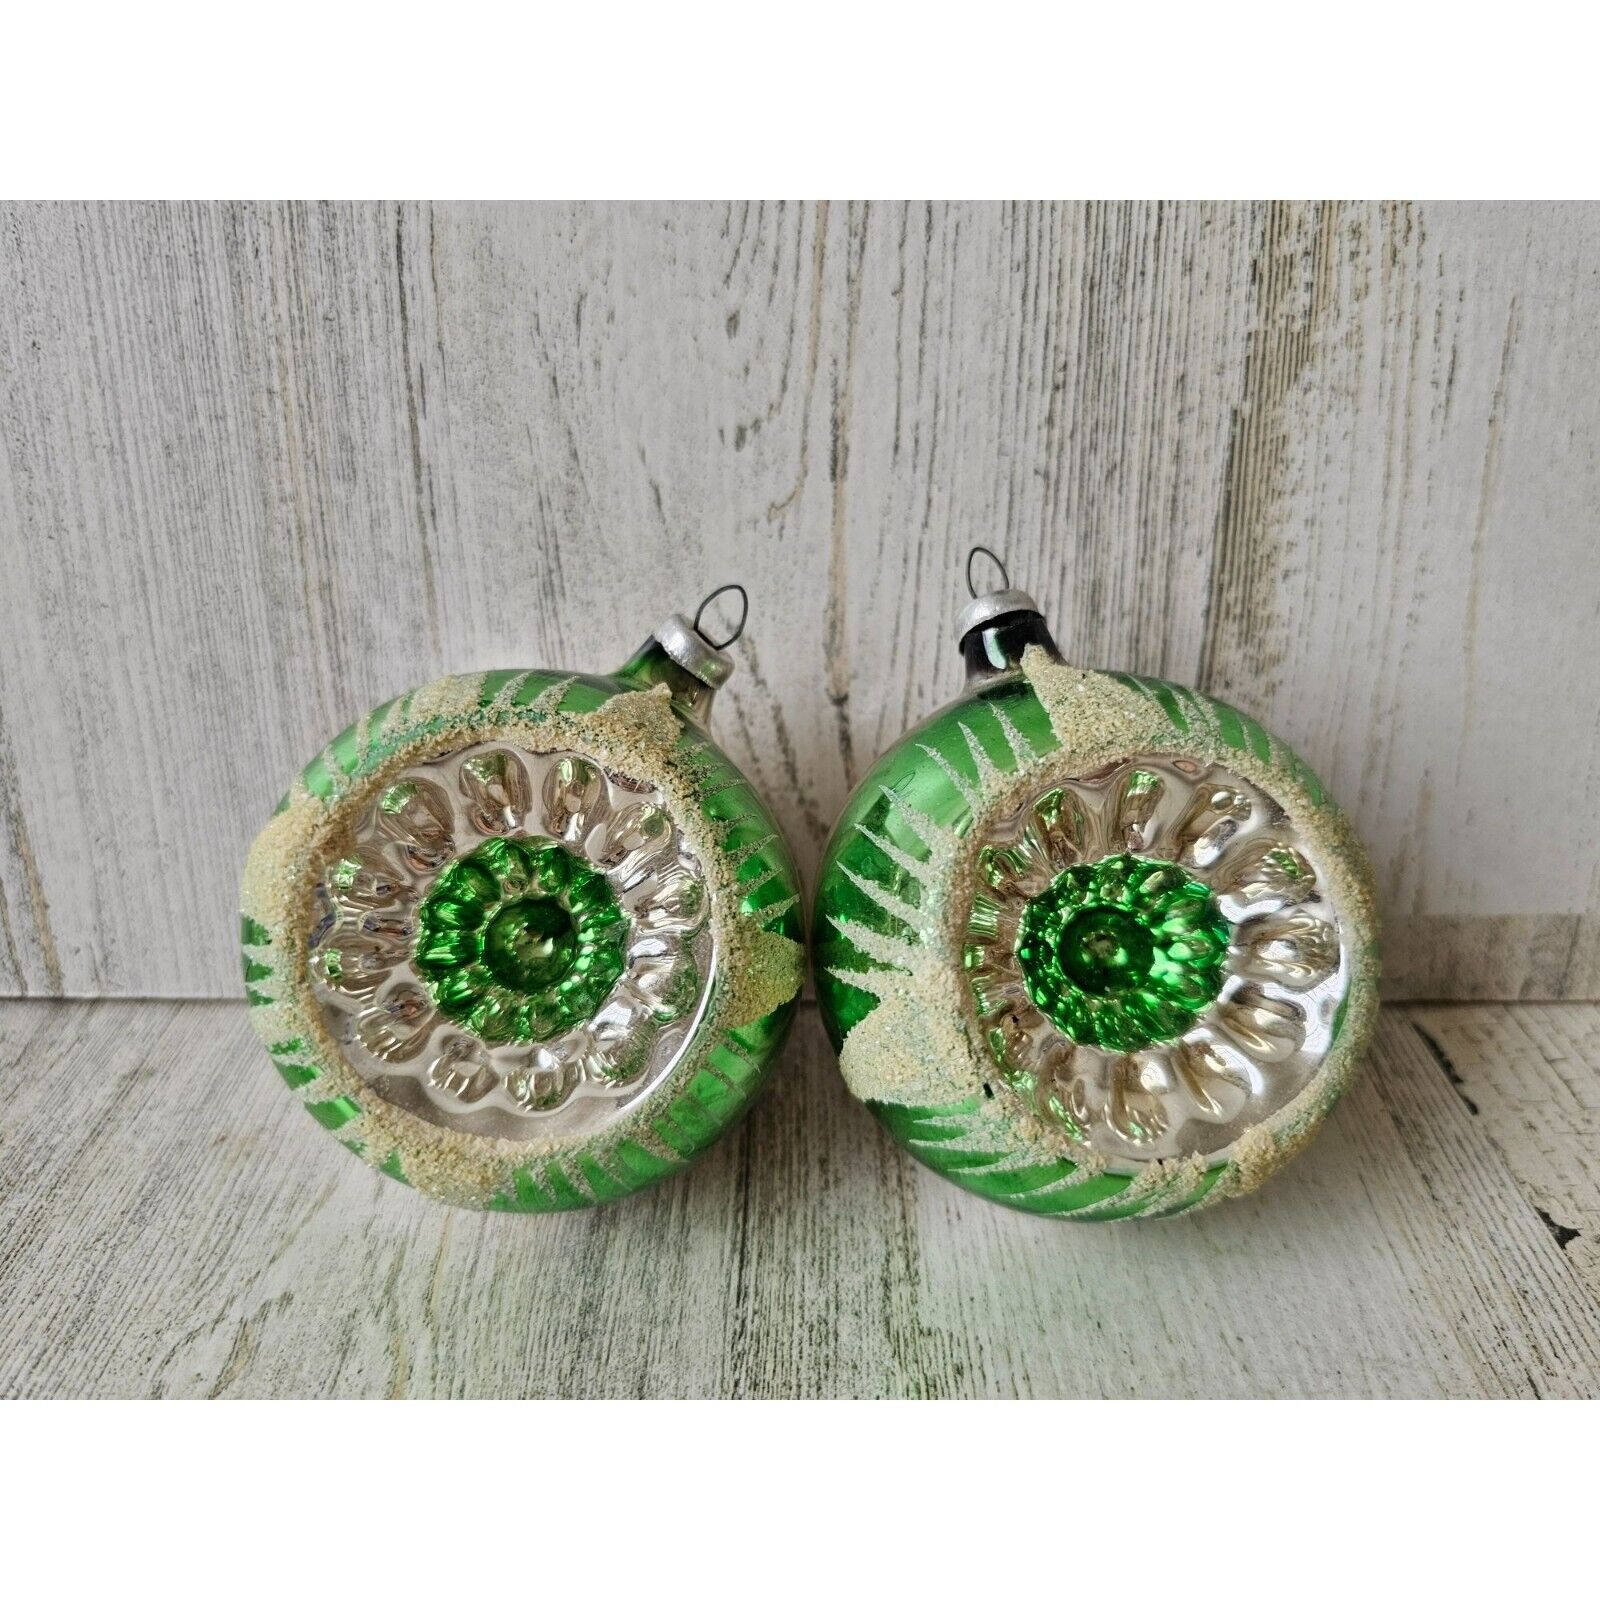 Vintage green indent flocked glitter ball mercury glass ornament tree Xmas set